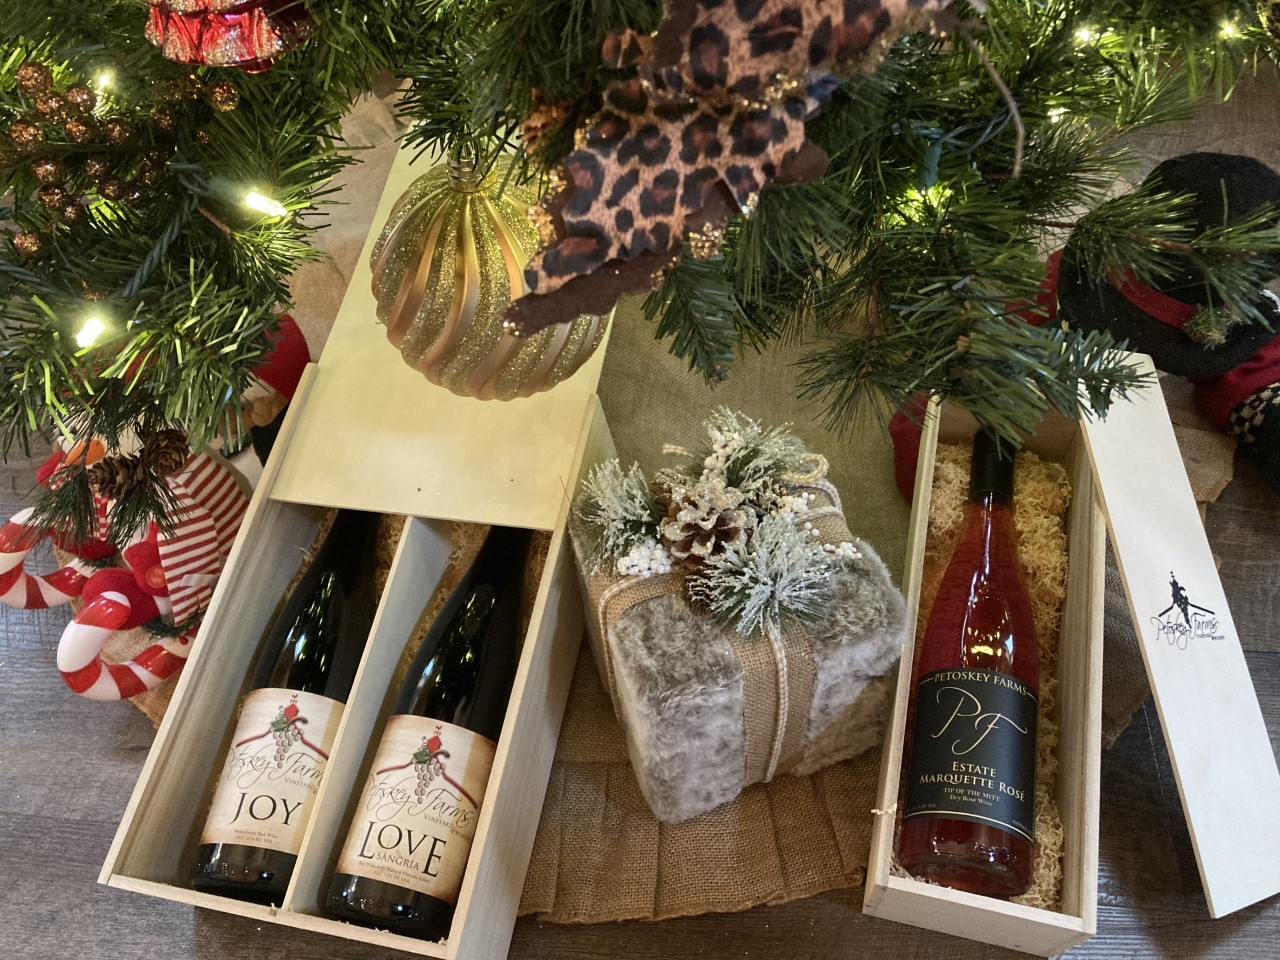 Wine bottles underneath the Christmas tree.